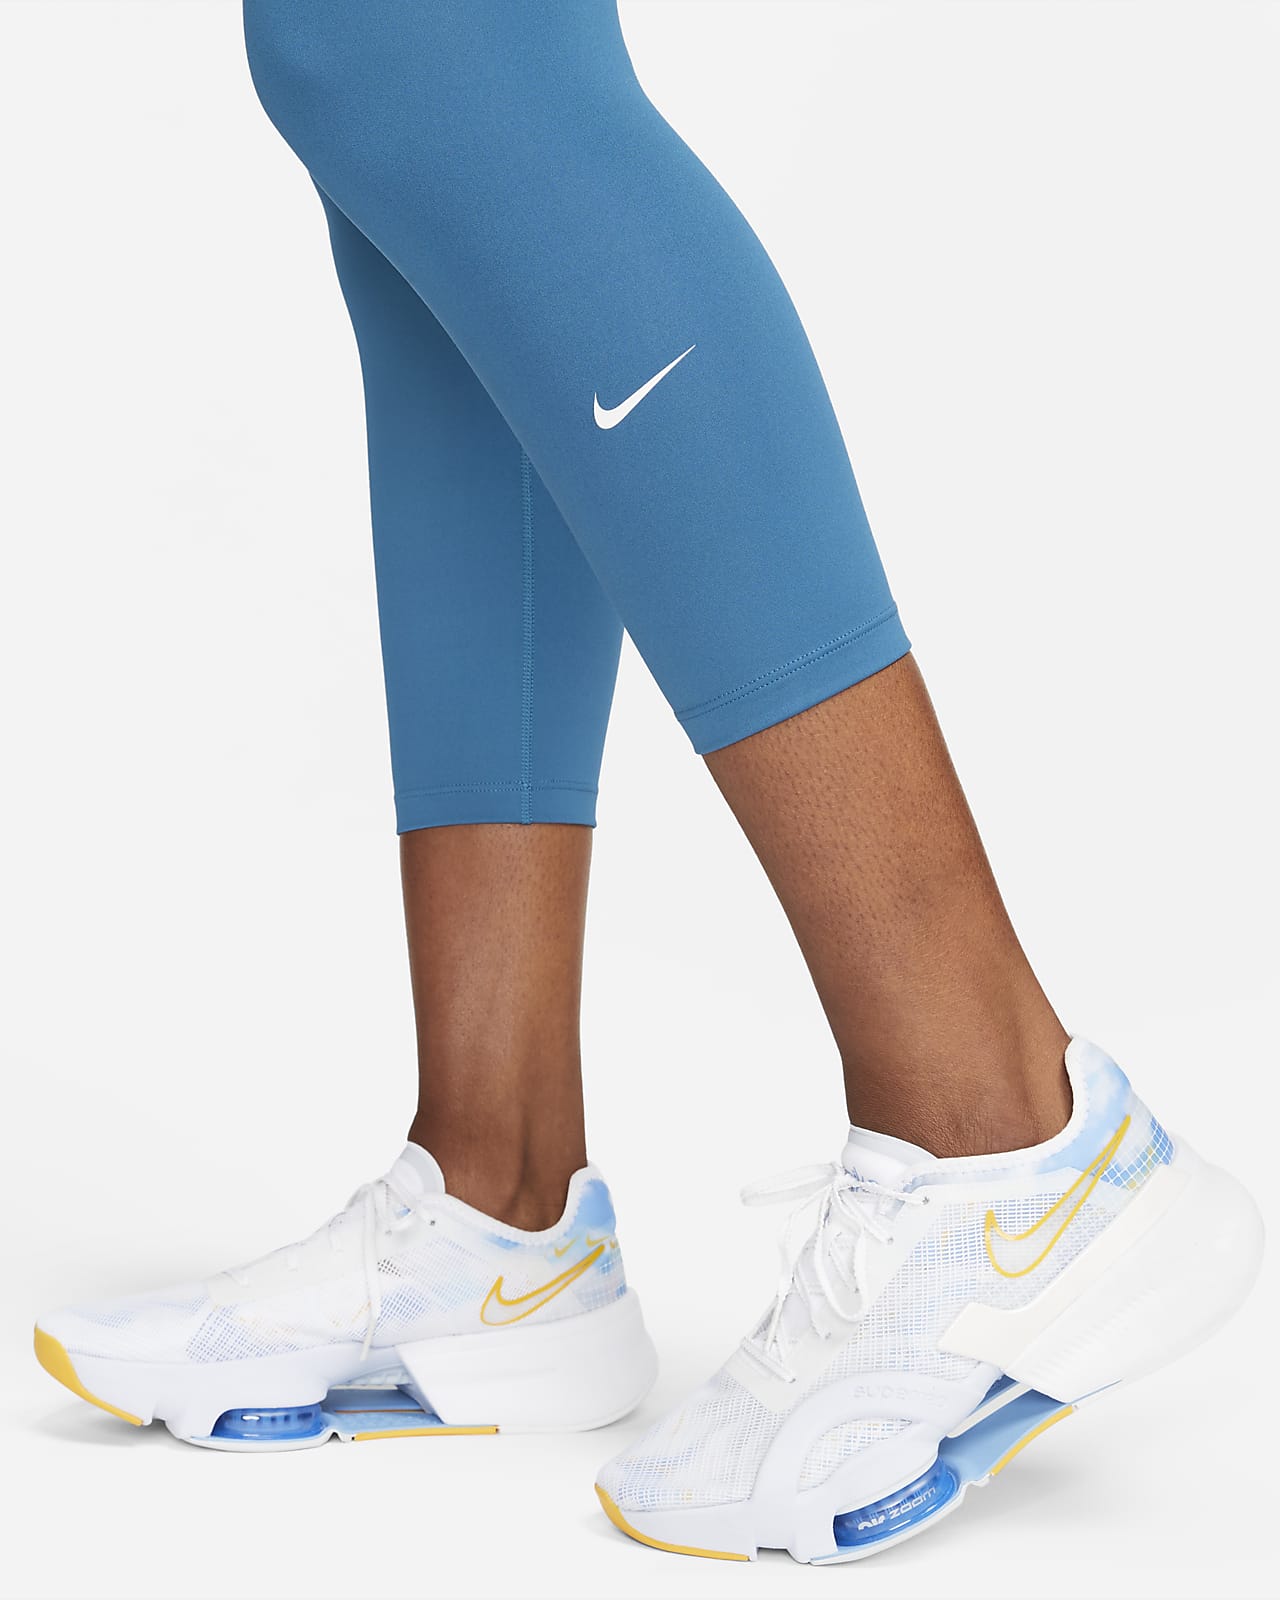 Nike One Leggings cortos de talle alto - Mujer. Nike ES